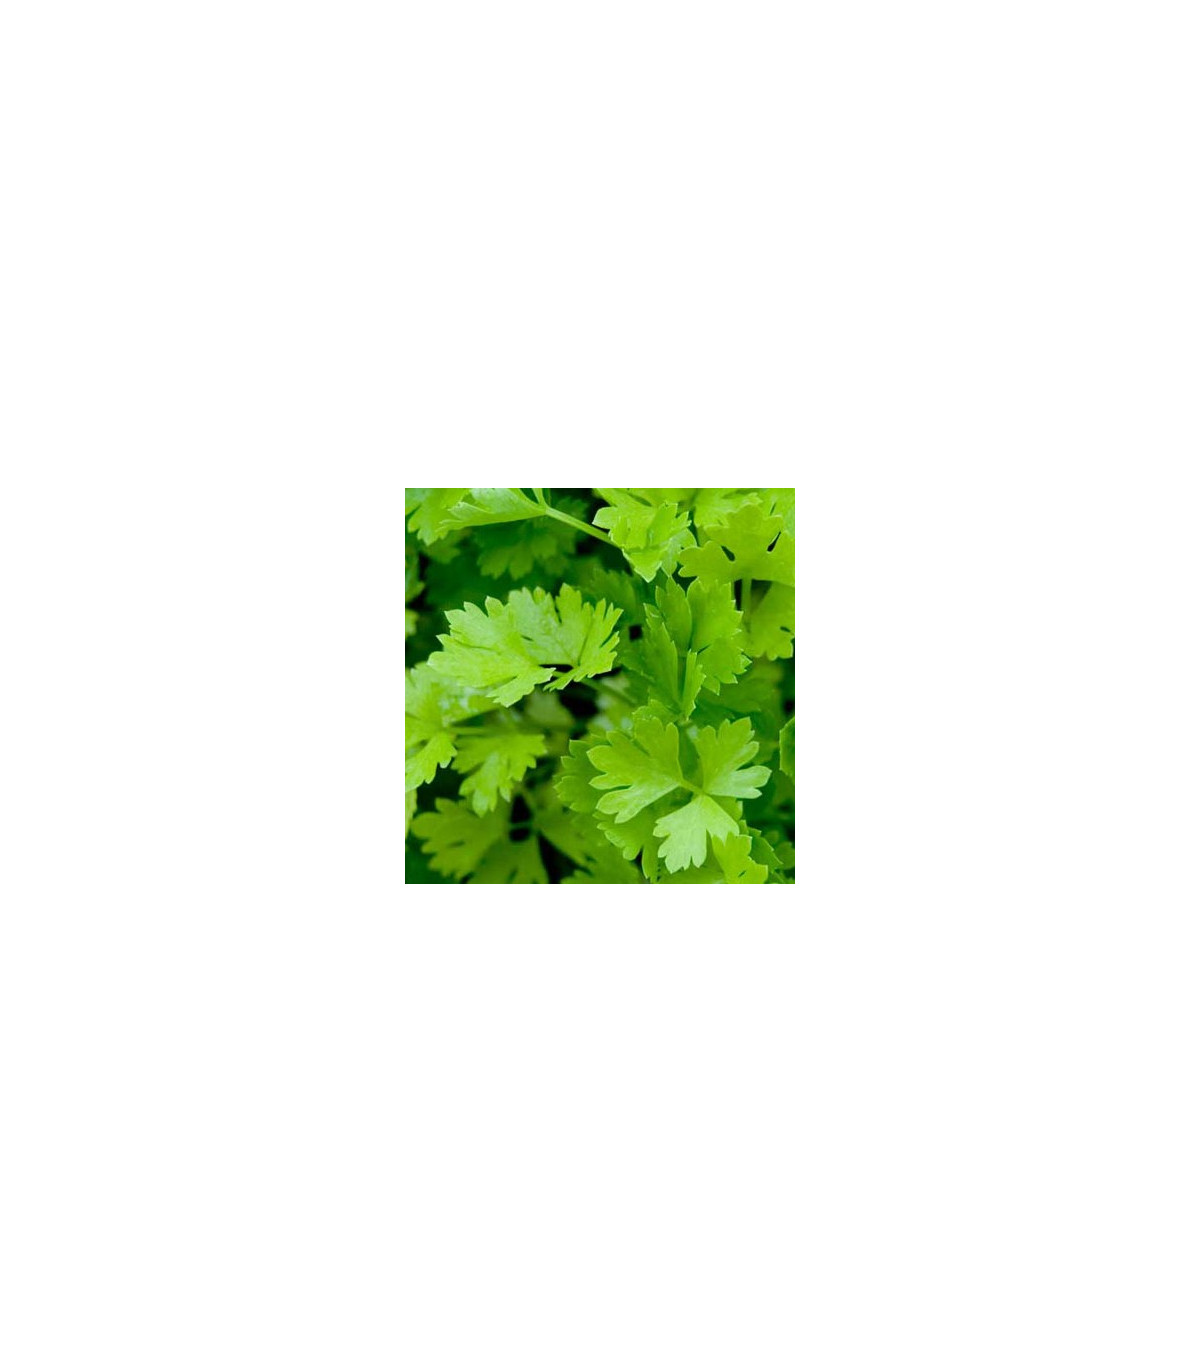 Celer řapíkatý - Apium graveolens - osivo celeru - 1 g